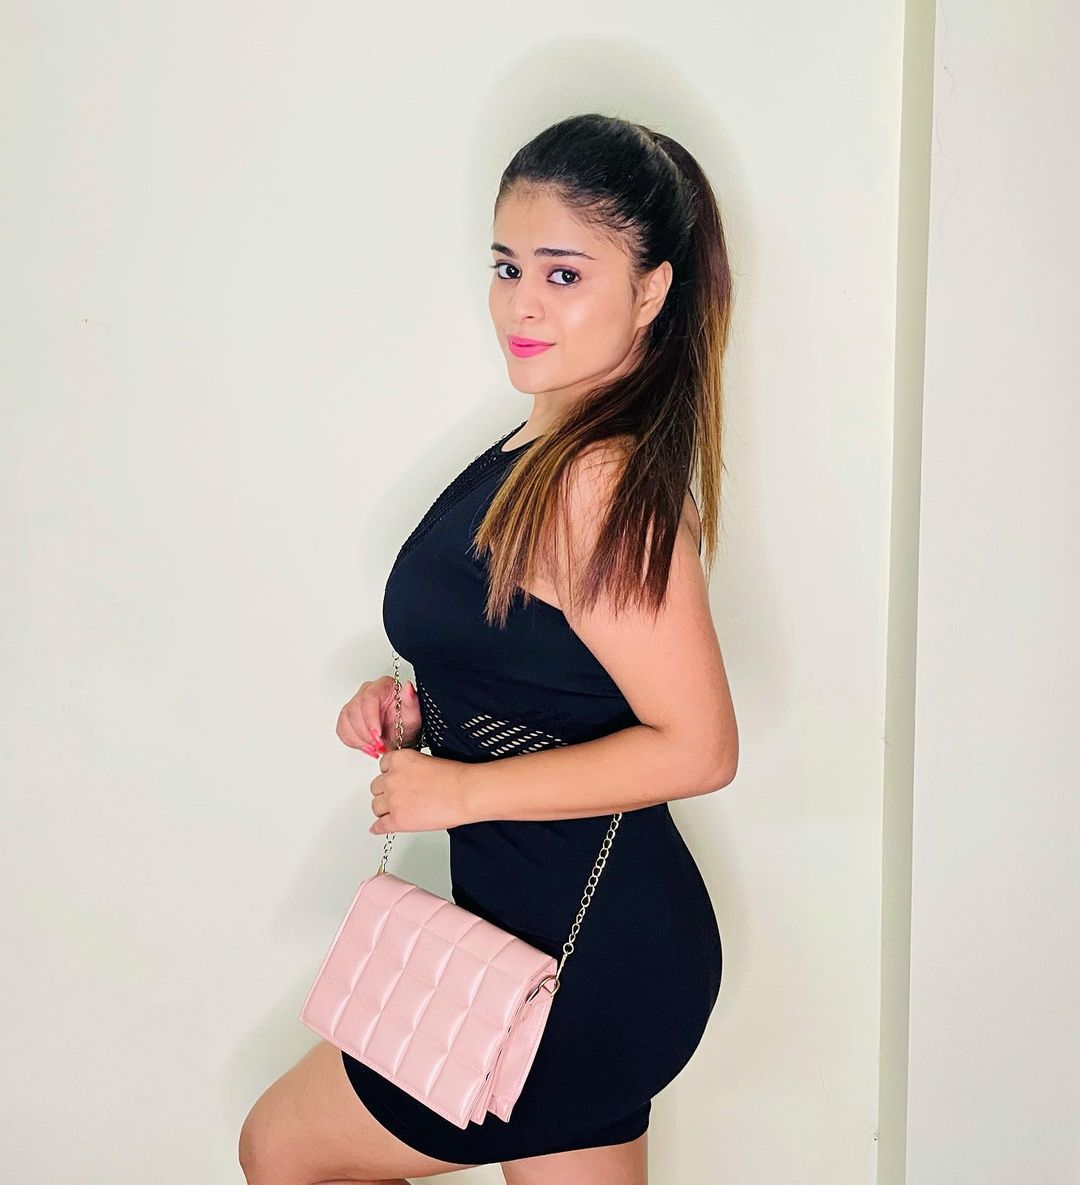 Shivangi Kohli (Instagram Star) Age, Boyfriend, Career, Biography